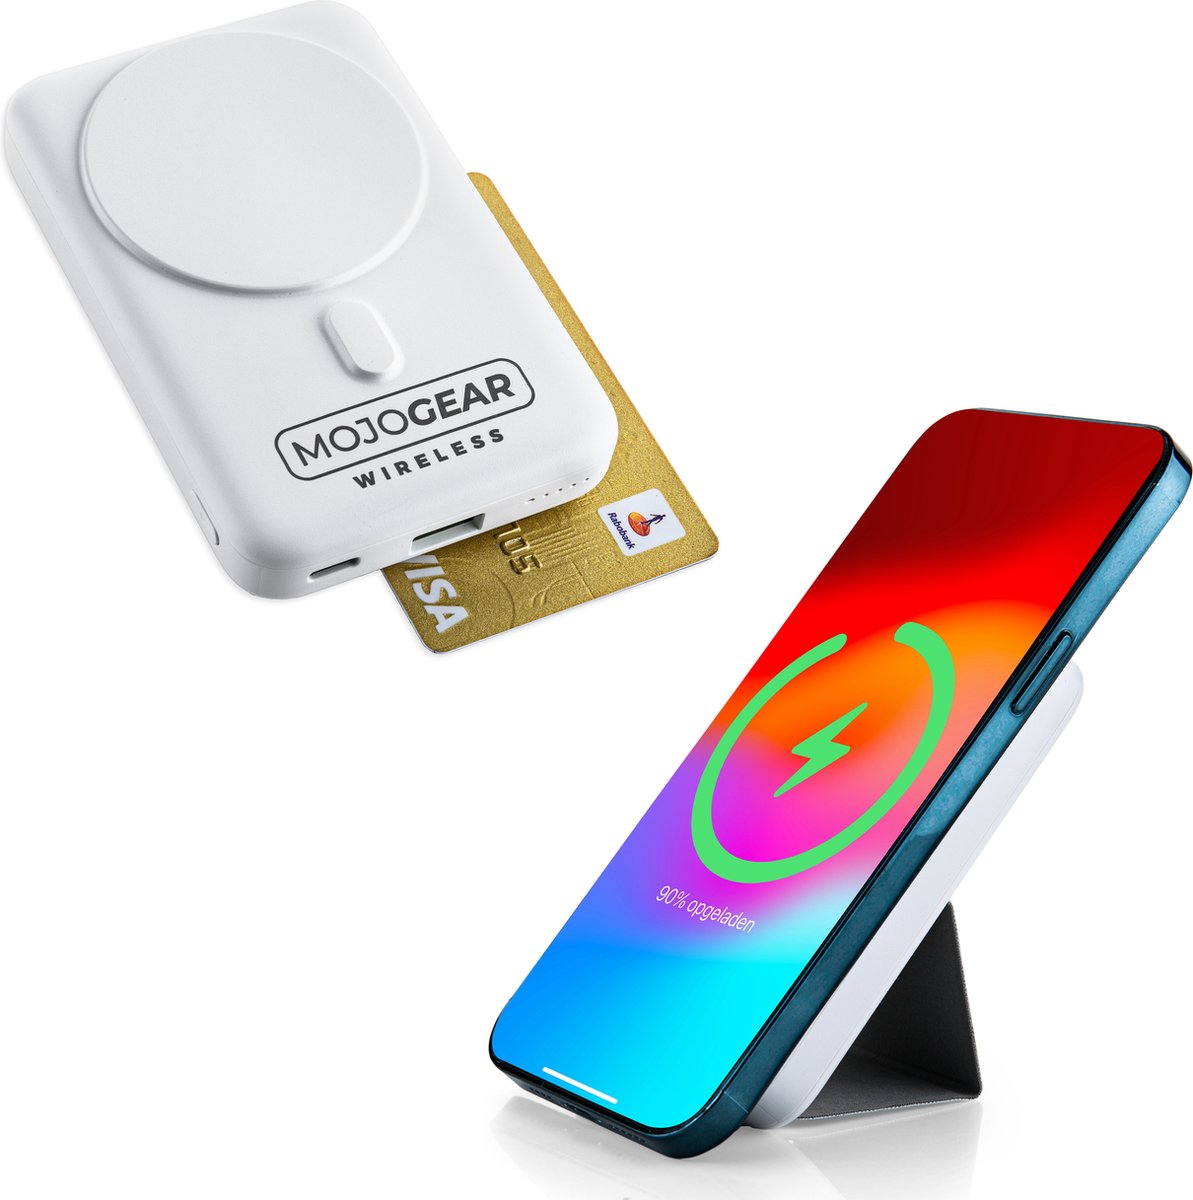 MOJOGEAR Wireless MagSafe powerbank 10.000 mAh - Magnetisch en Draadloos voor Android en iPhone - Met standaard - Wit